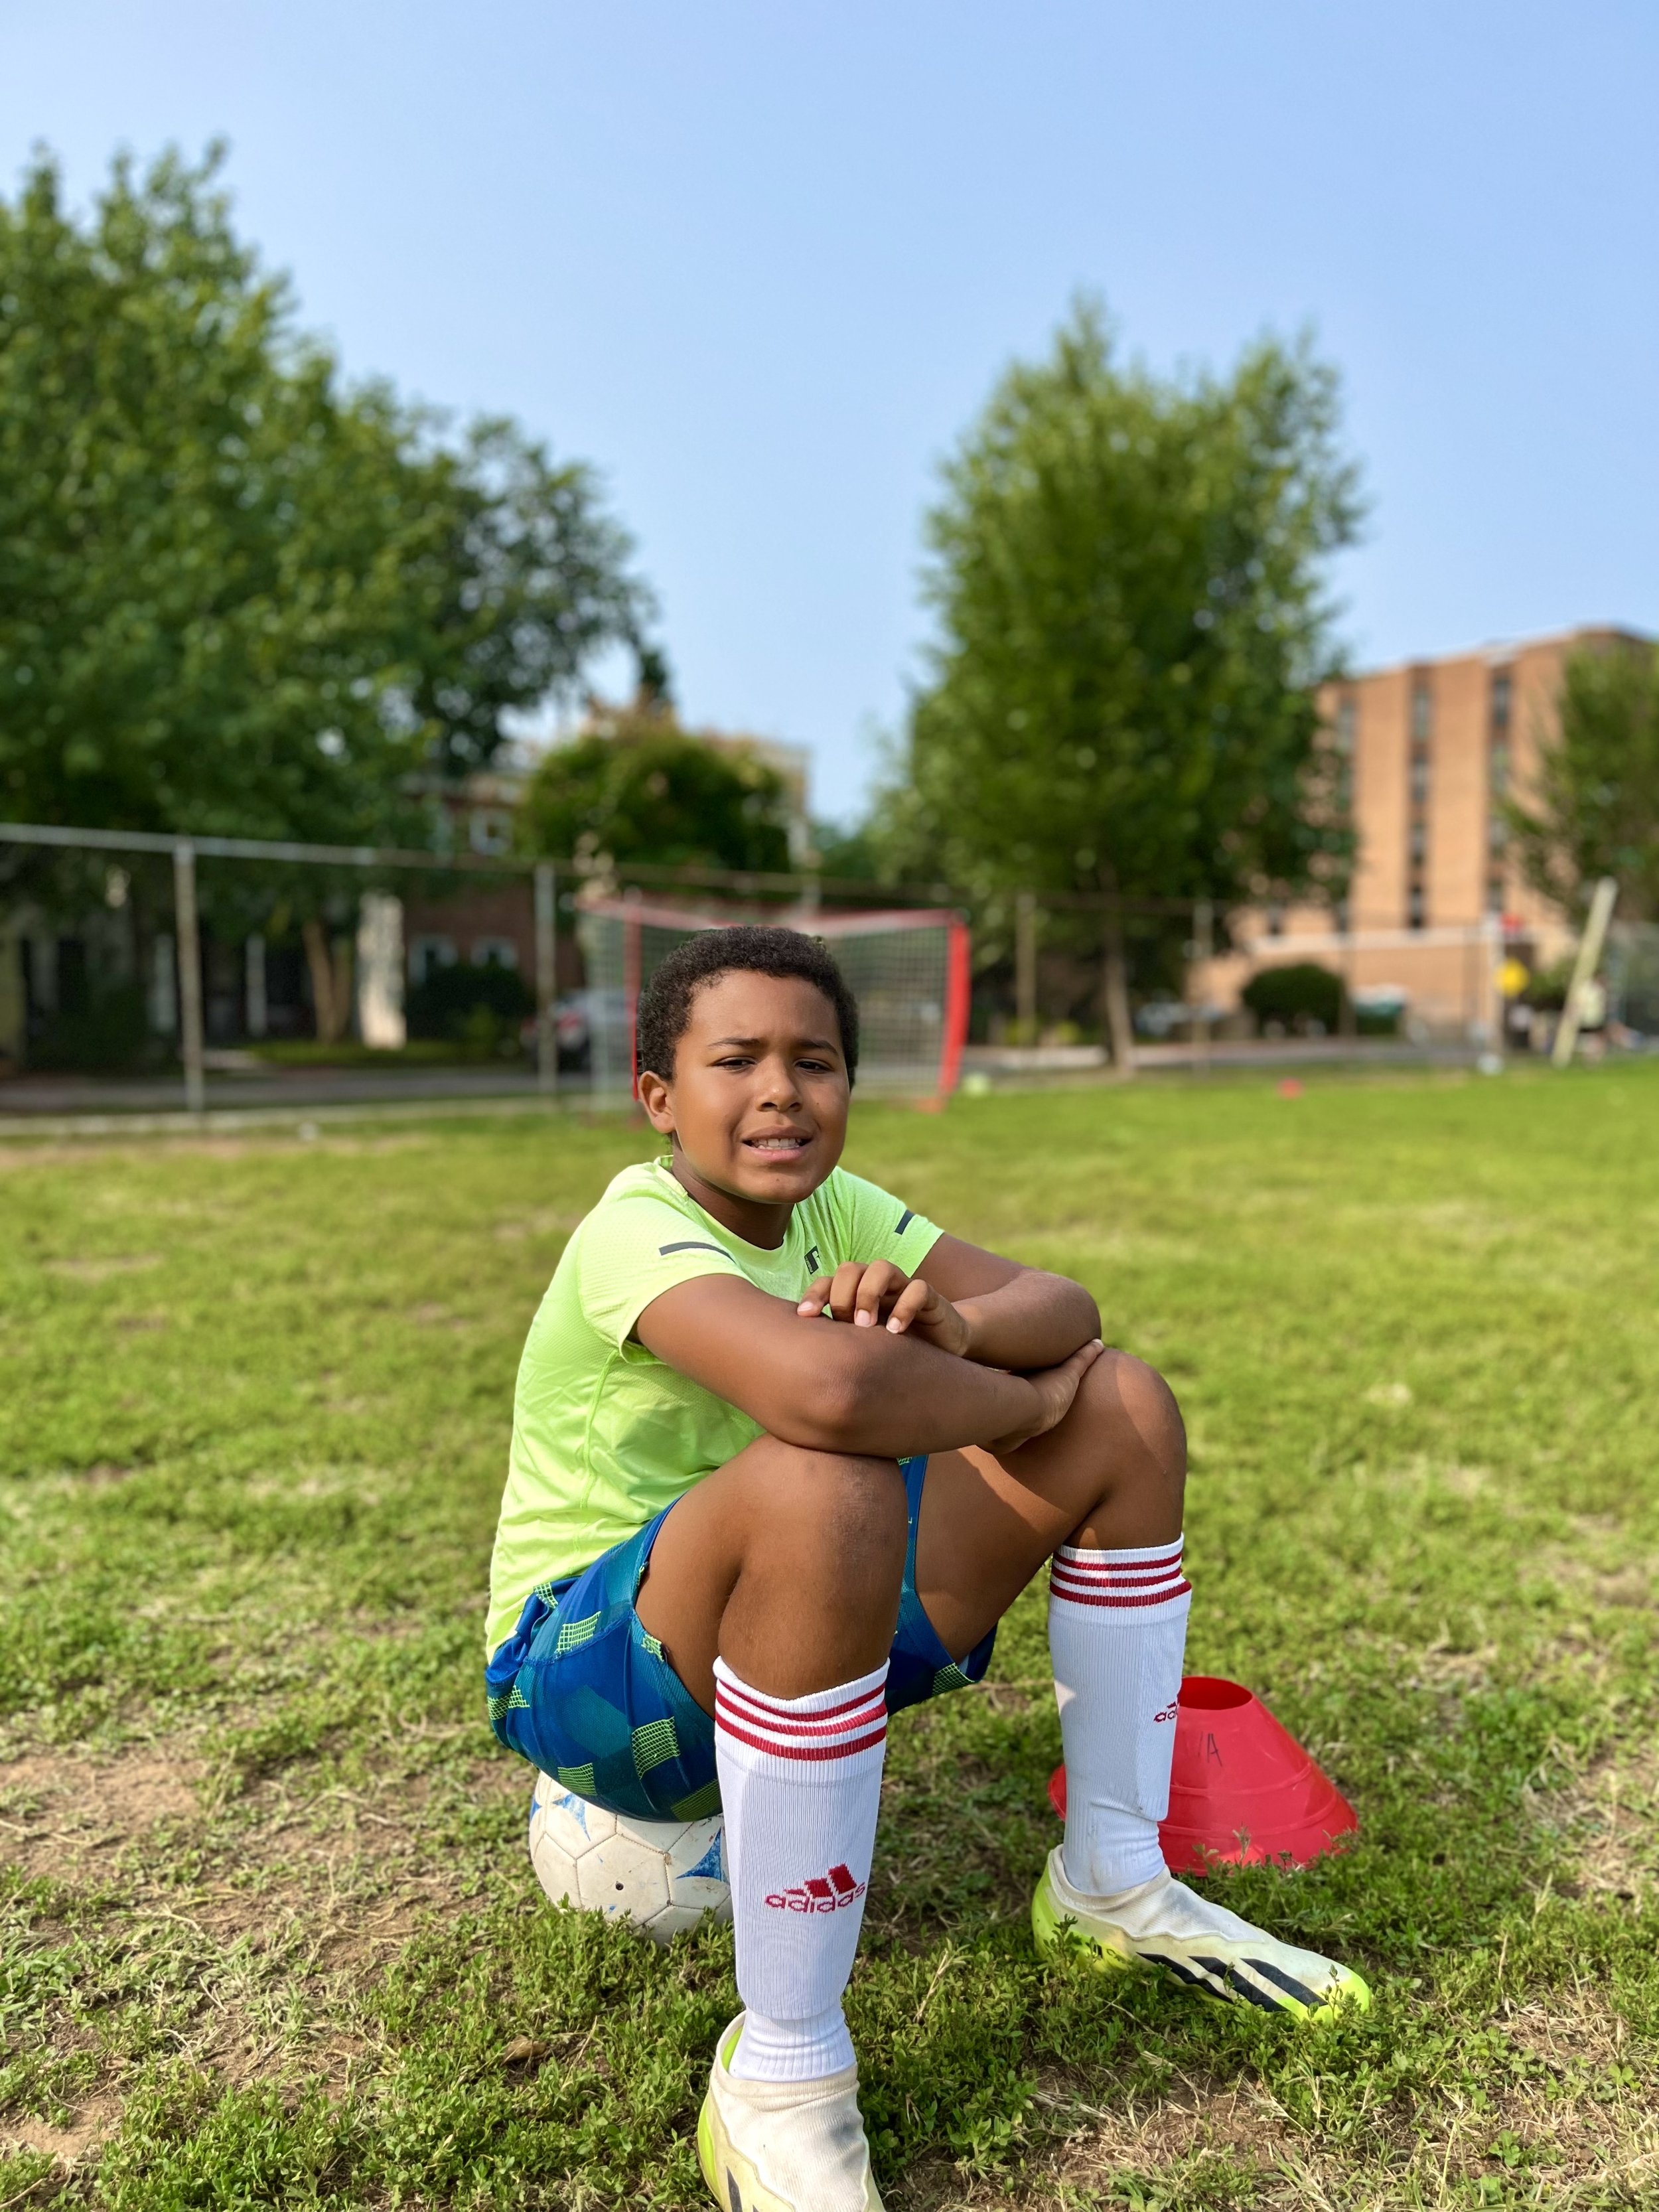 Dc-way-soccer-club-for-kids-in-washington-dc-summer-camp-at-tyler-elementary-school- 9003.jpeg